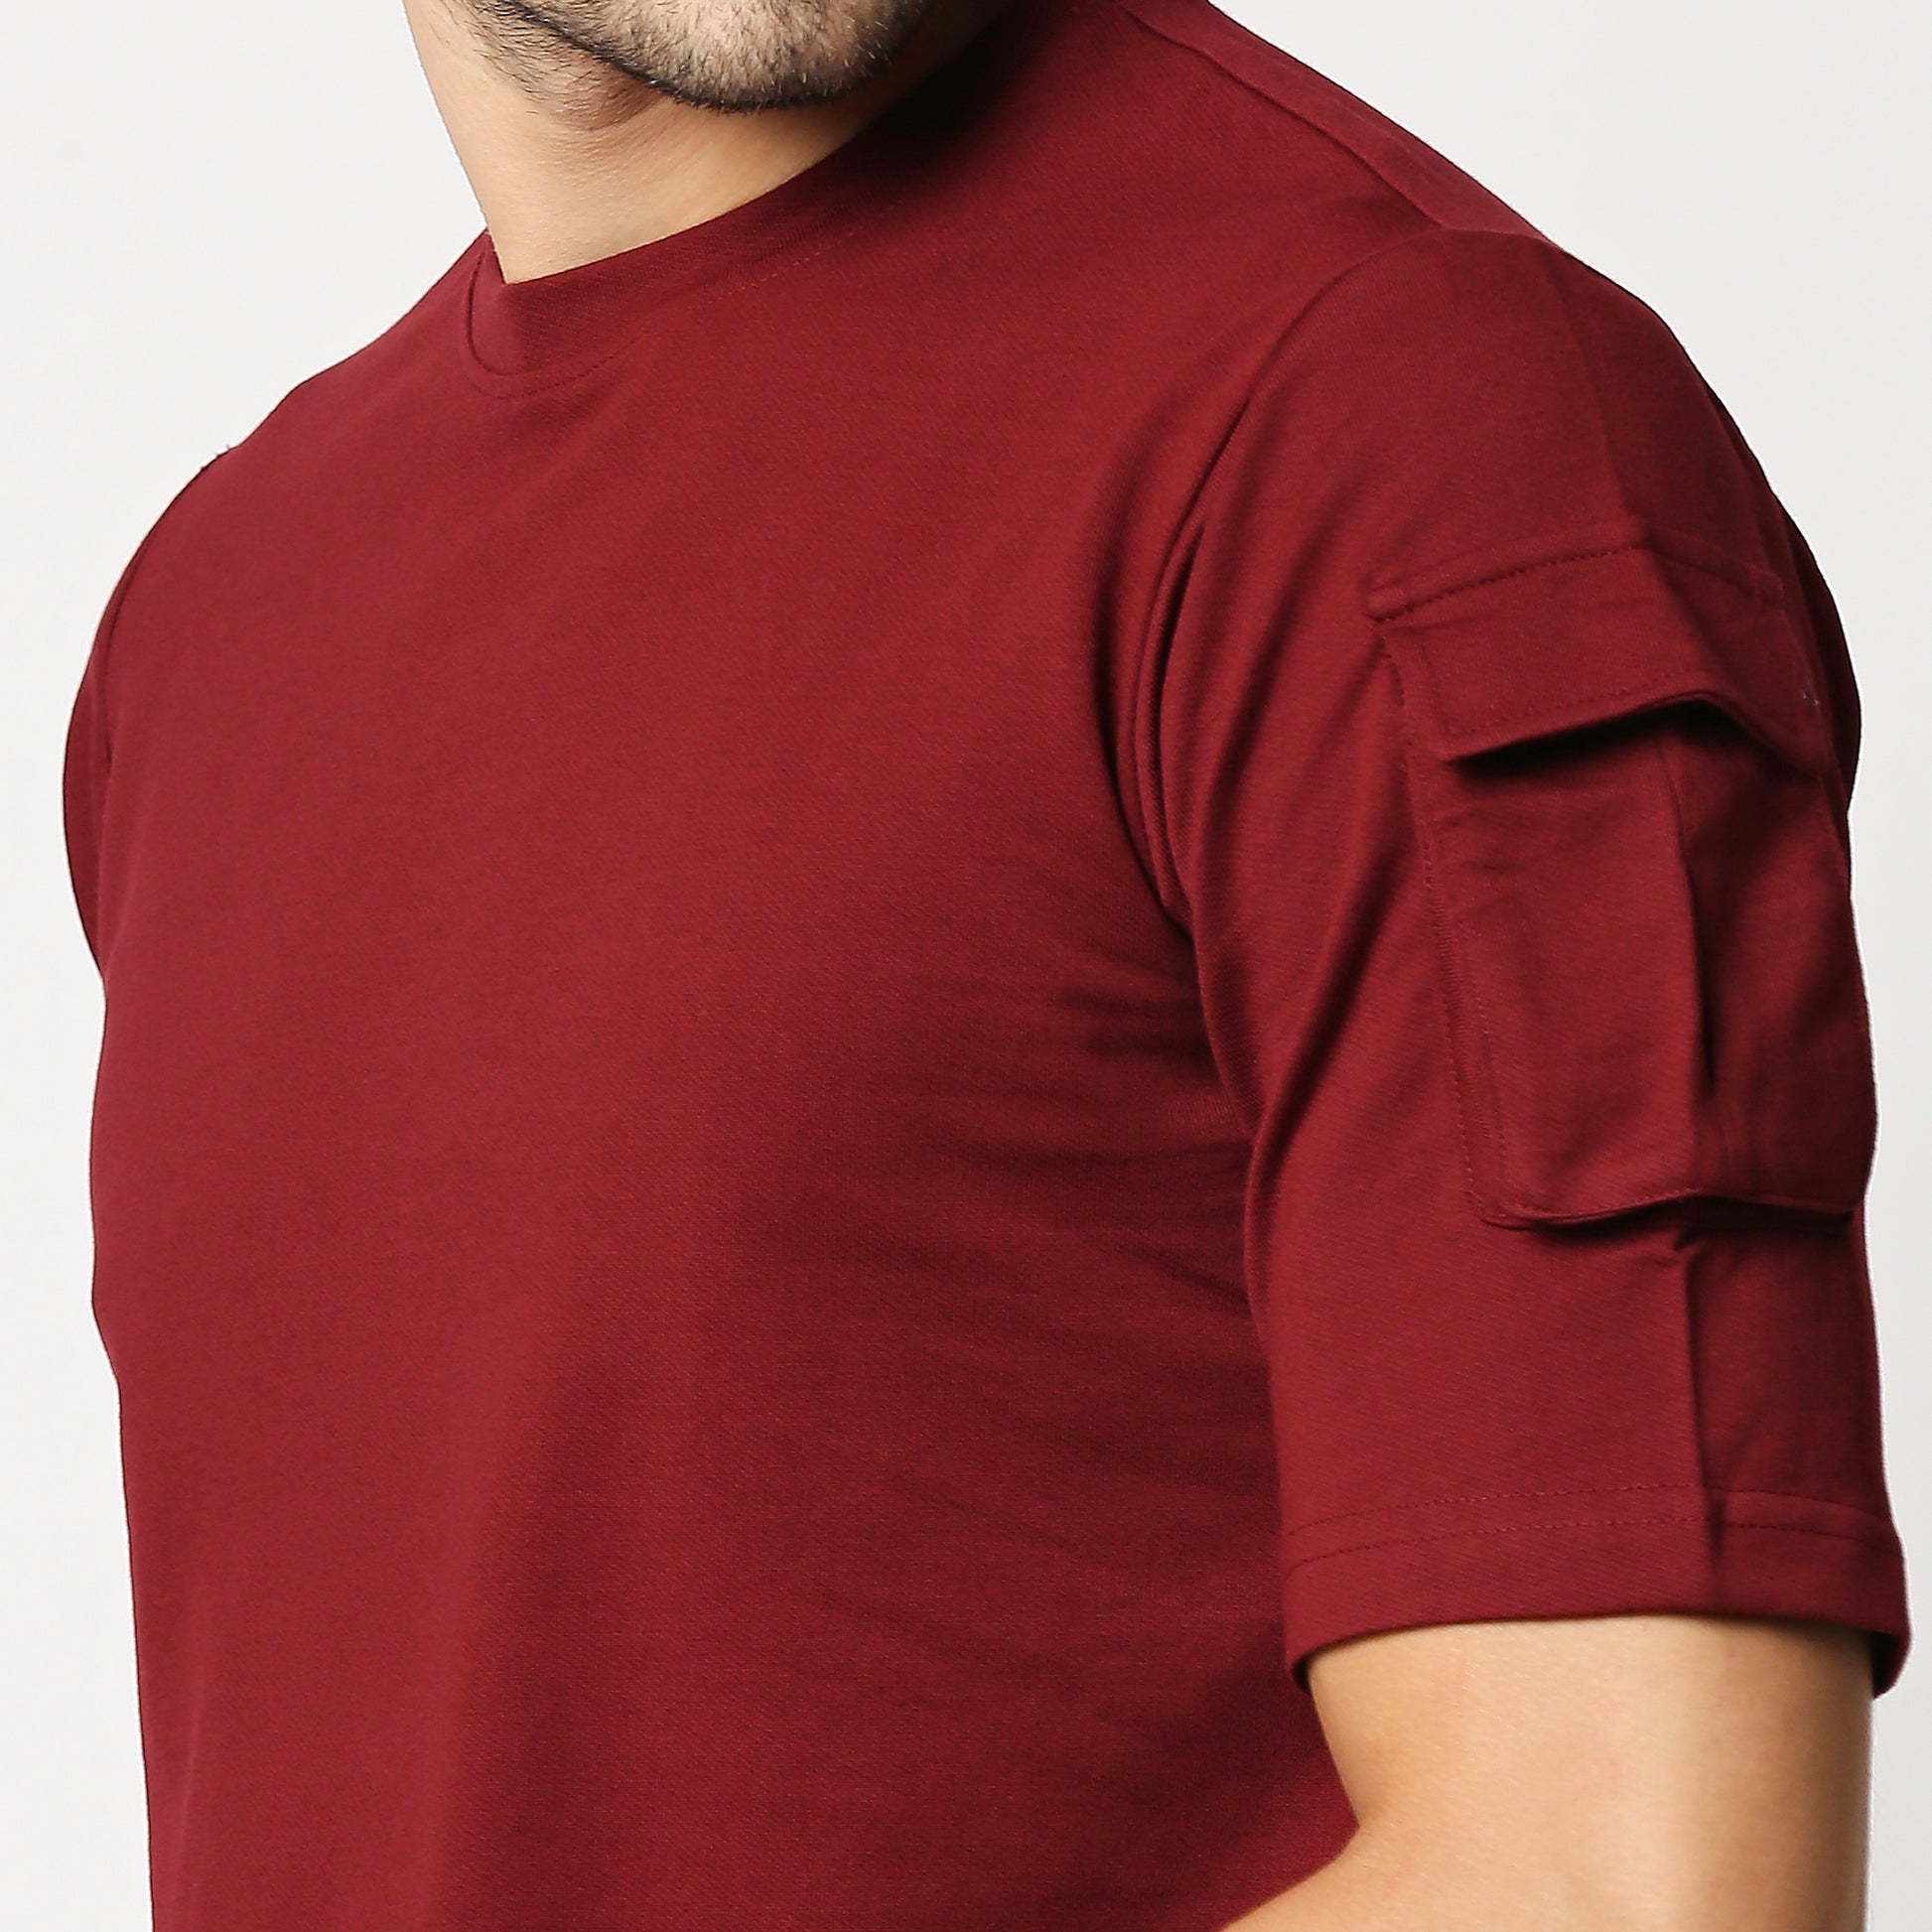 Fostino Ibu Maroon Round Neck T-Shirt with Pocket on Arms Sleeves - Fostino - T-Shirts